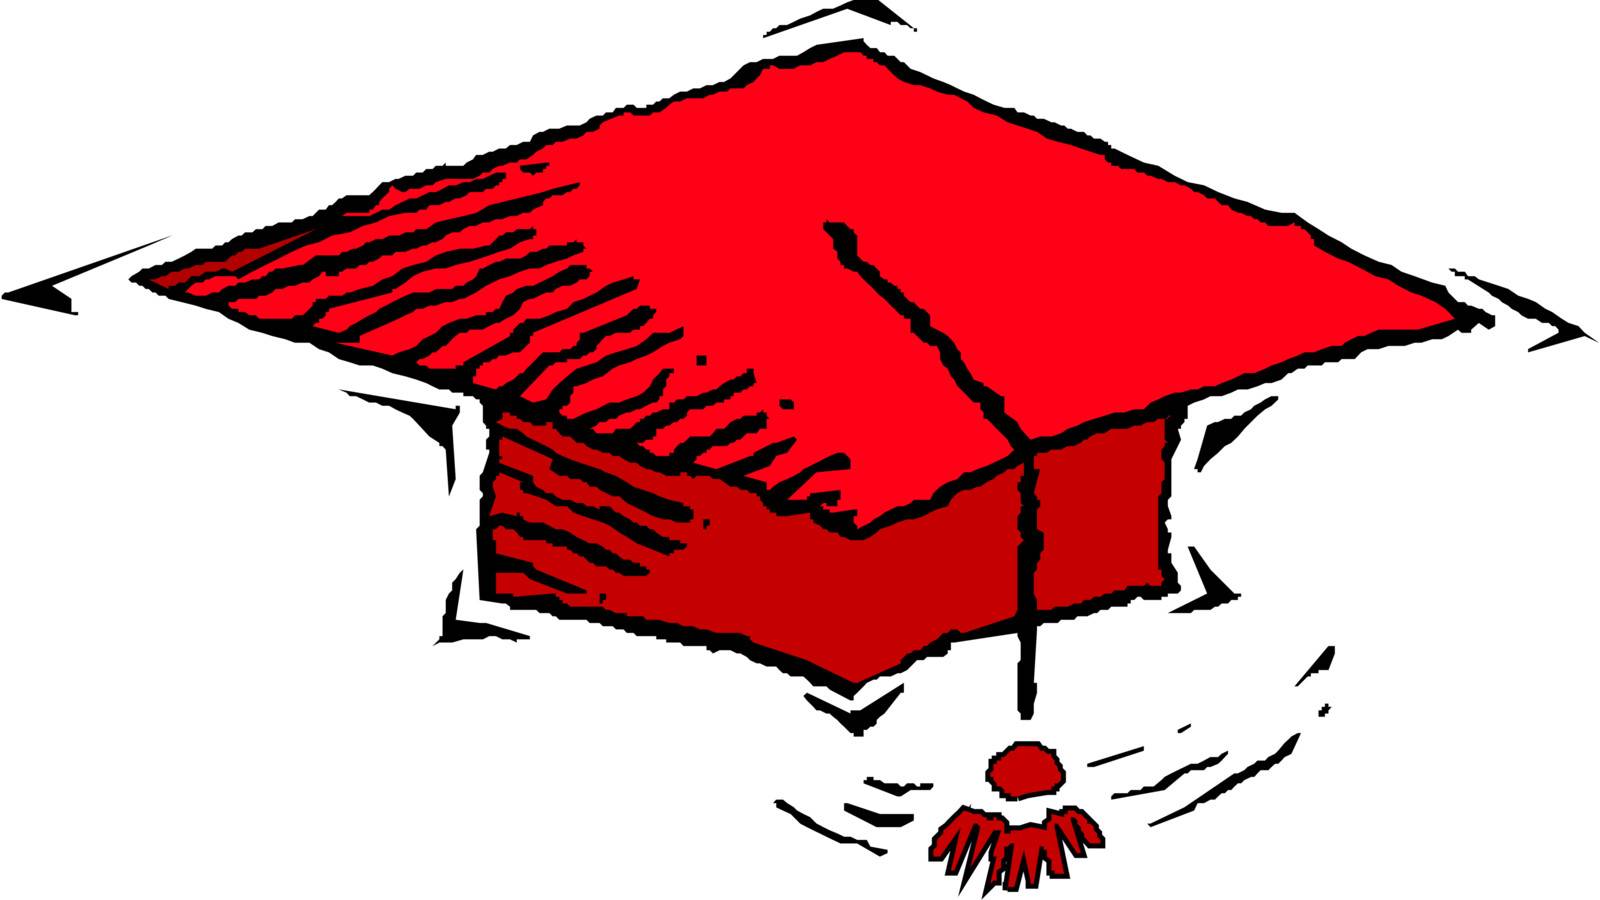 Graduation cap by yurka